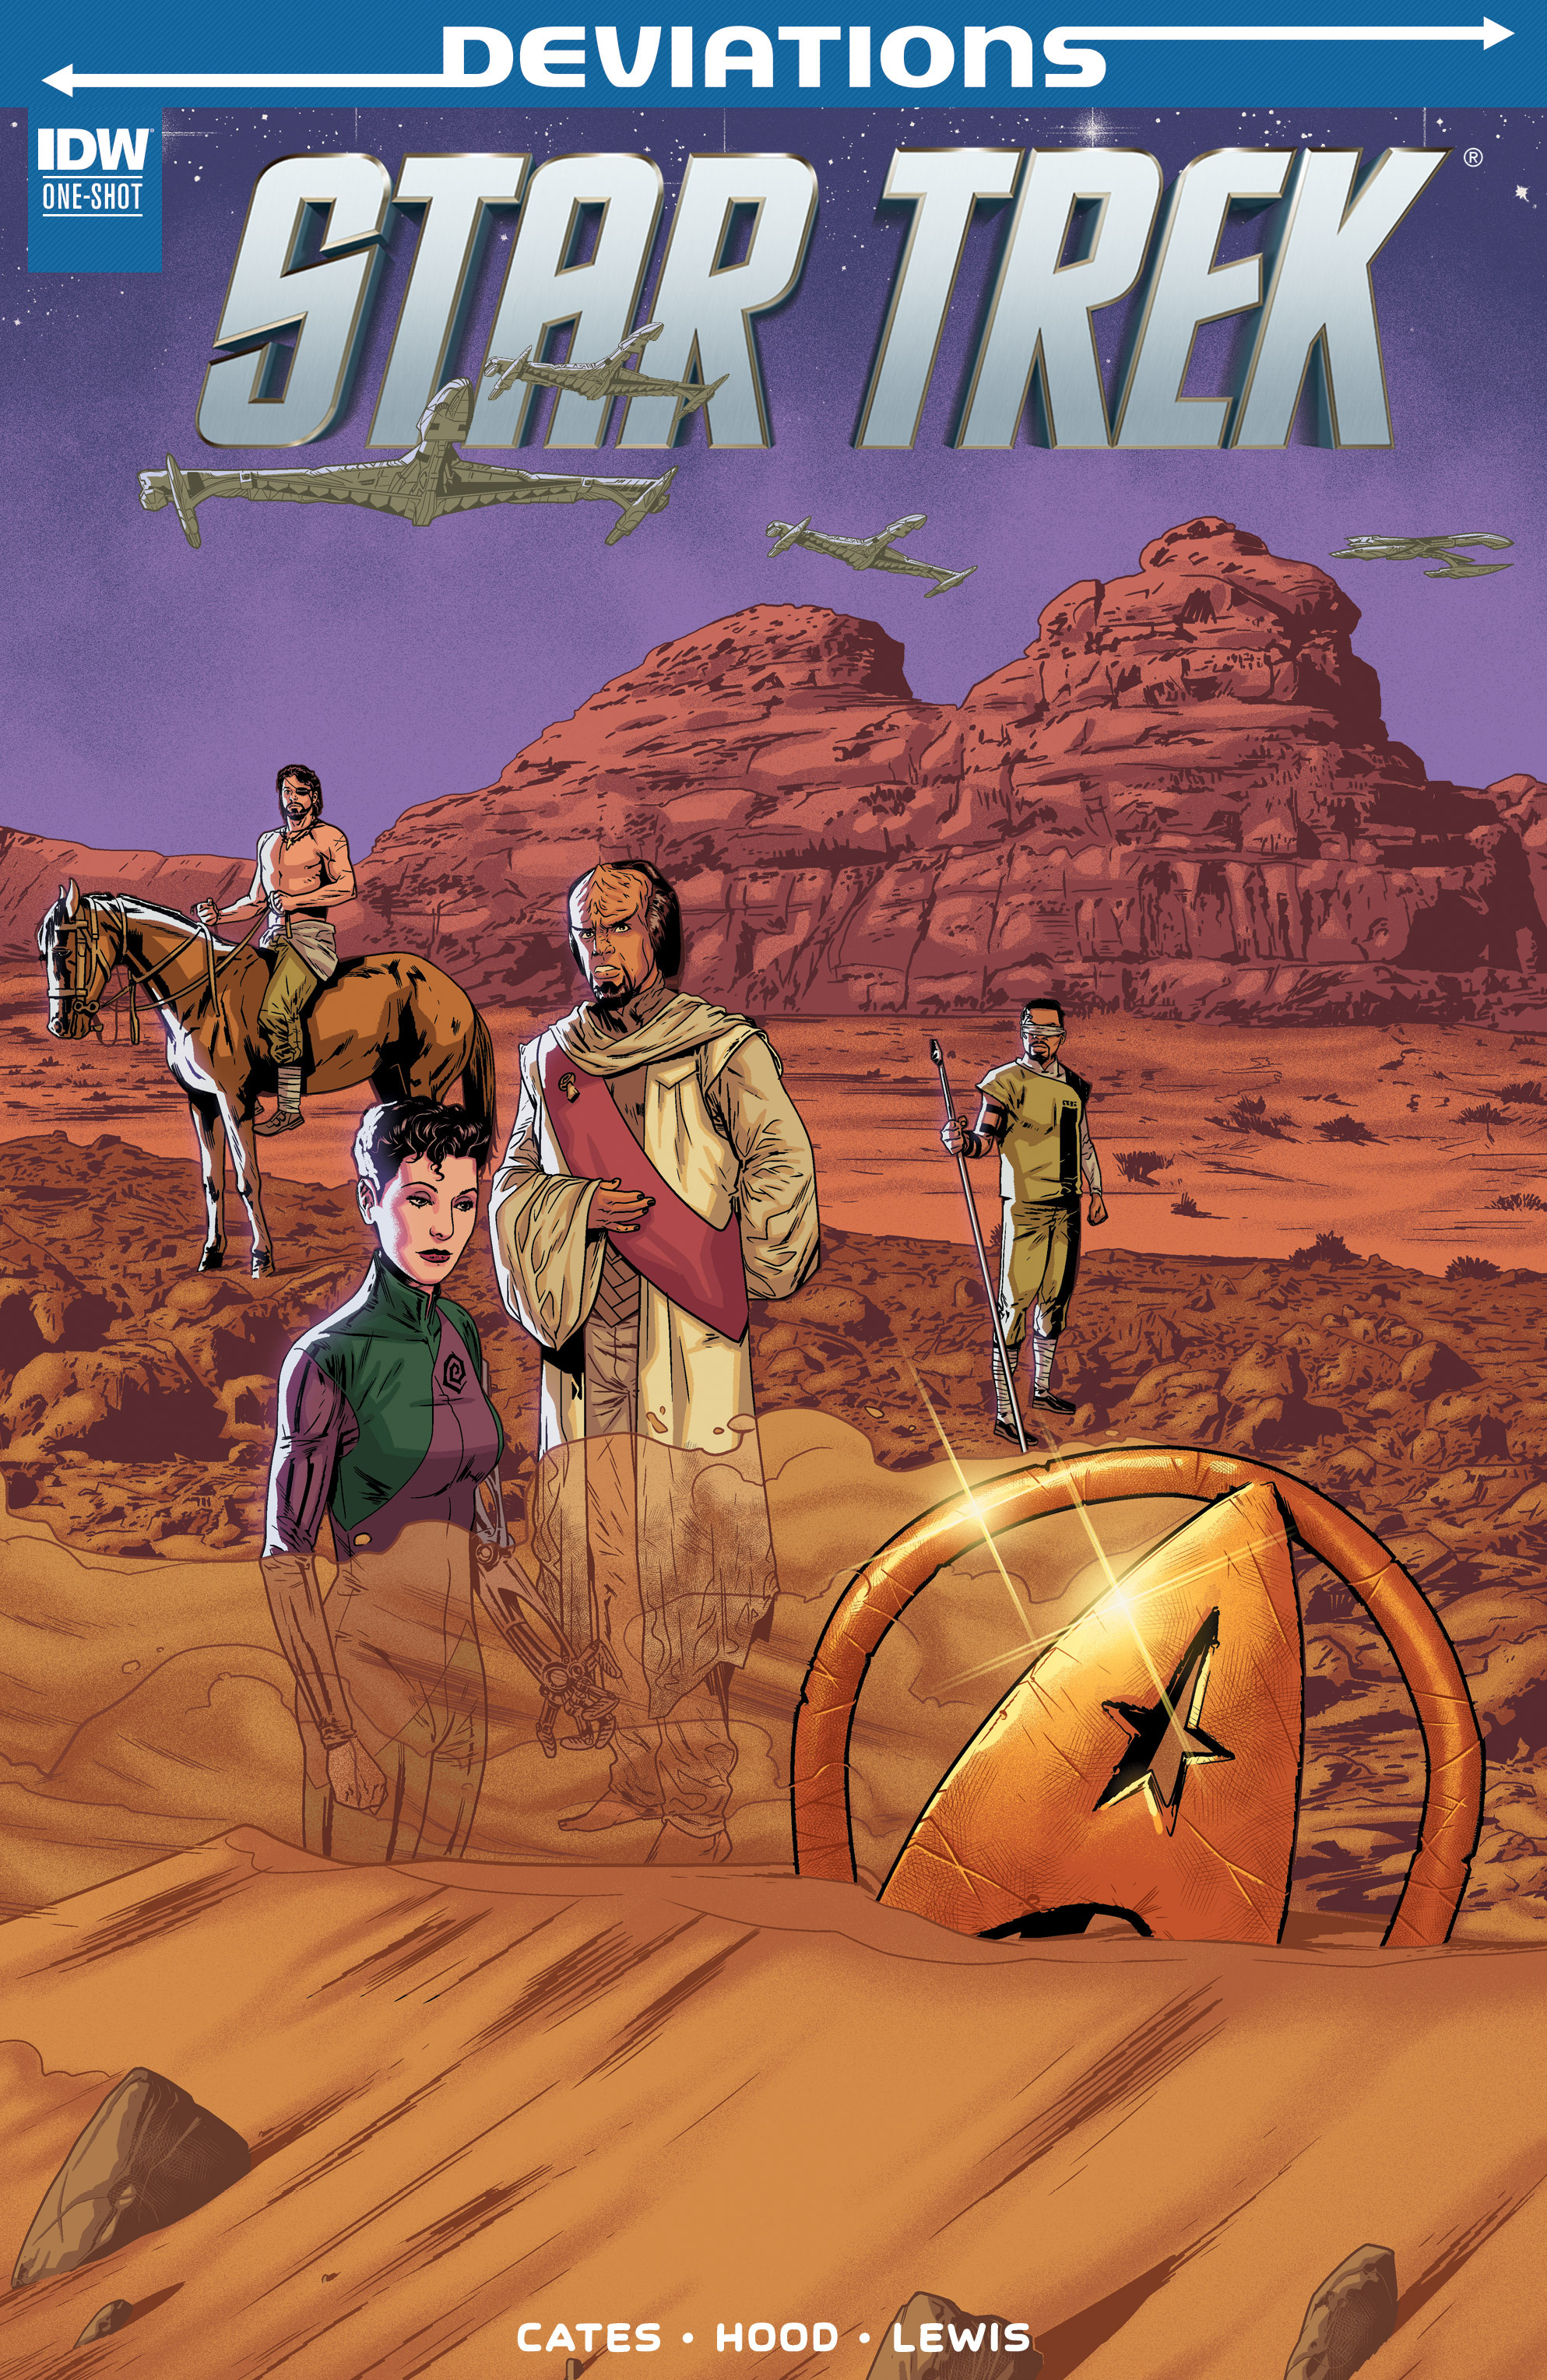 Read online Star Trek: Deviations comic -  Issue # Full - 1